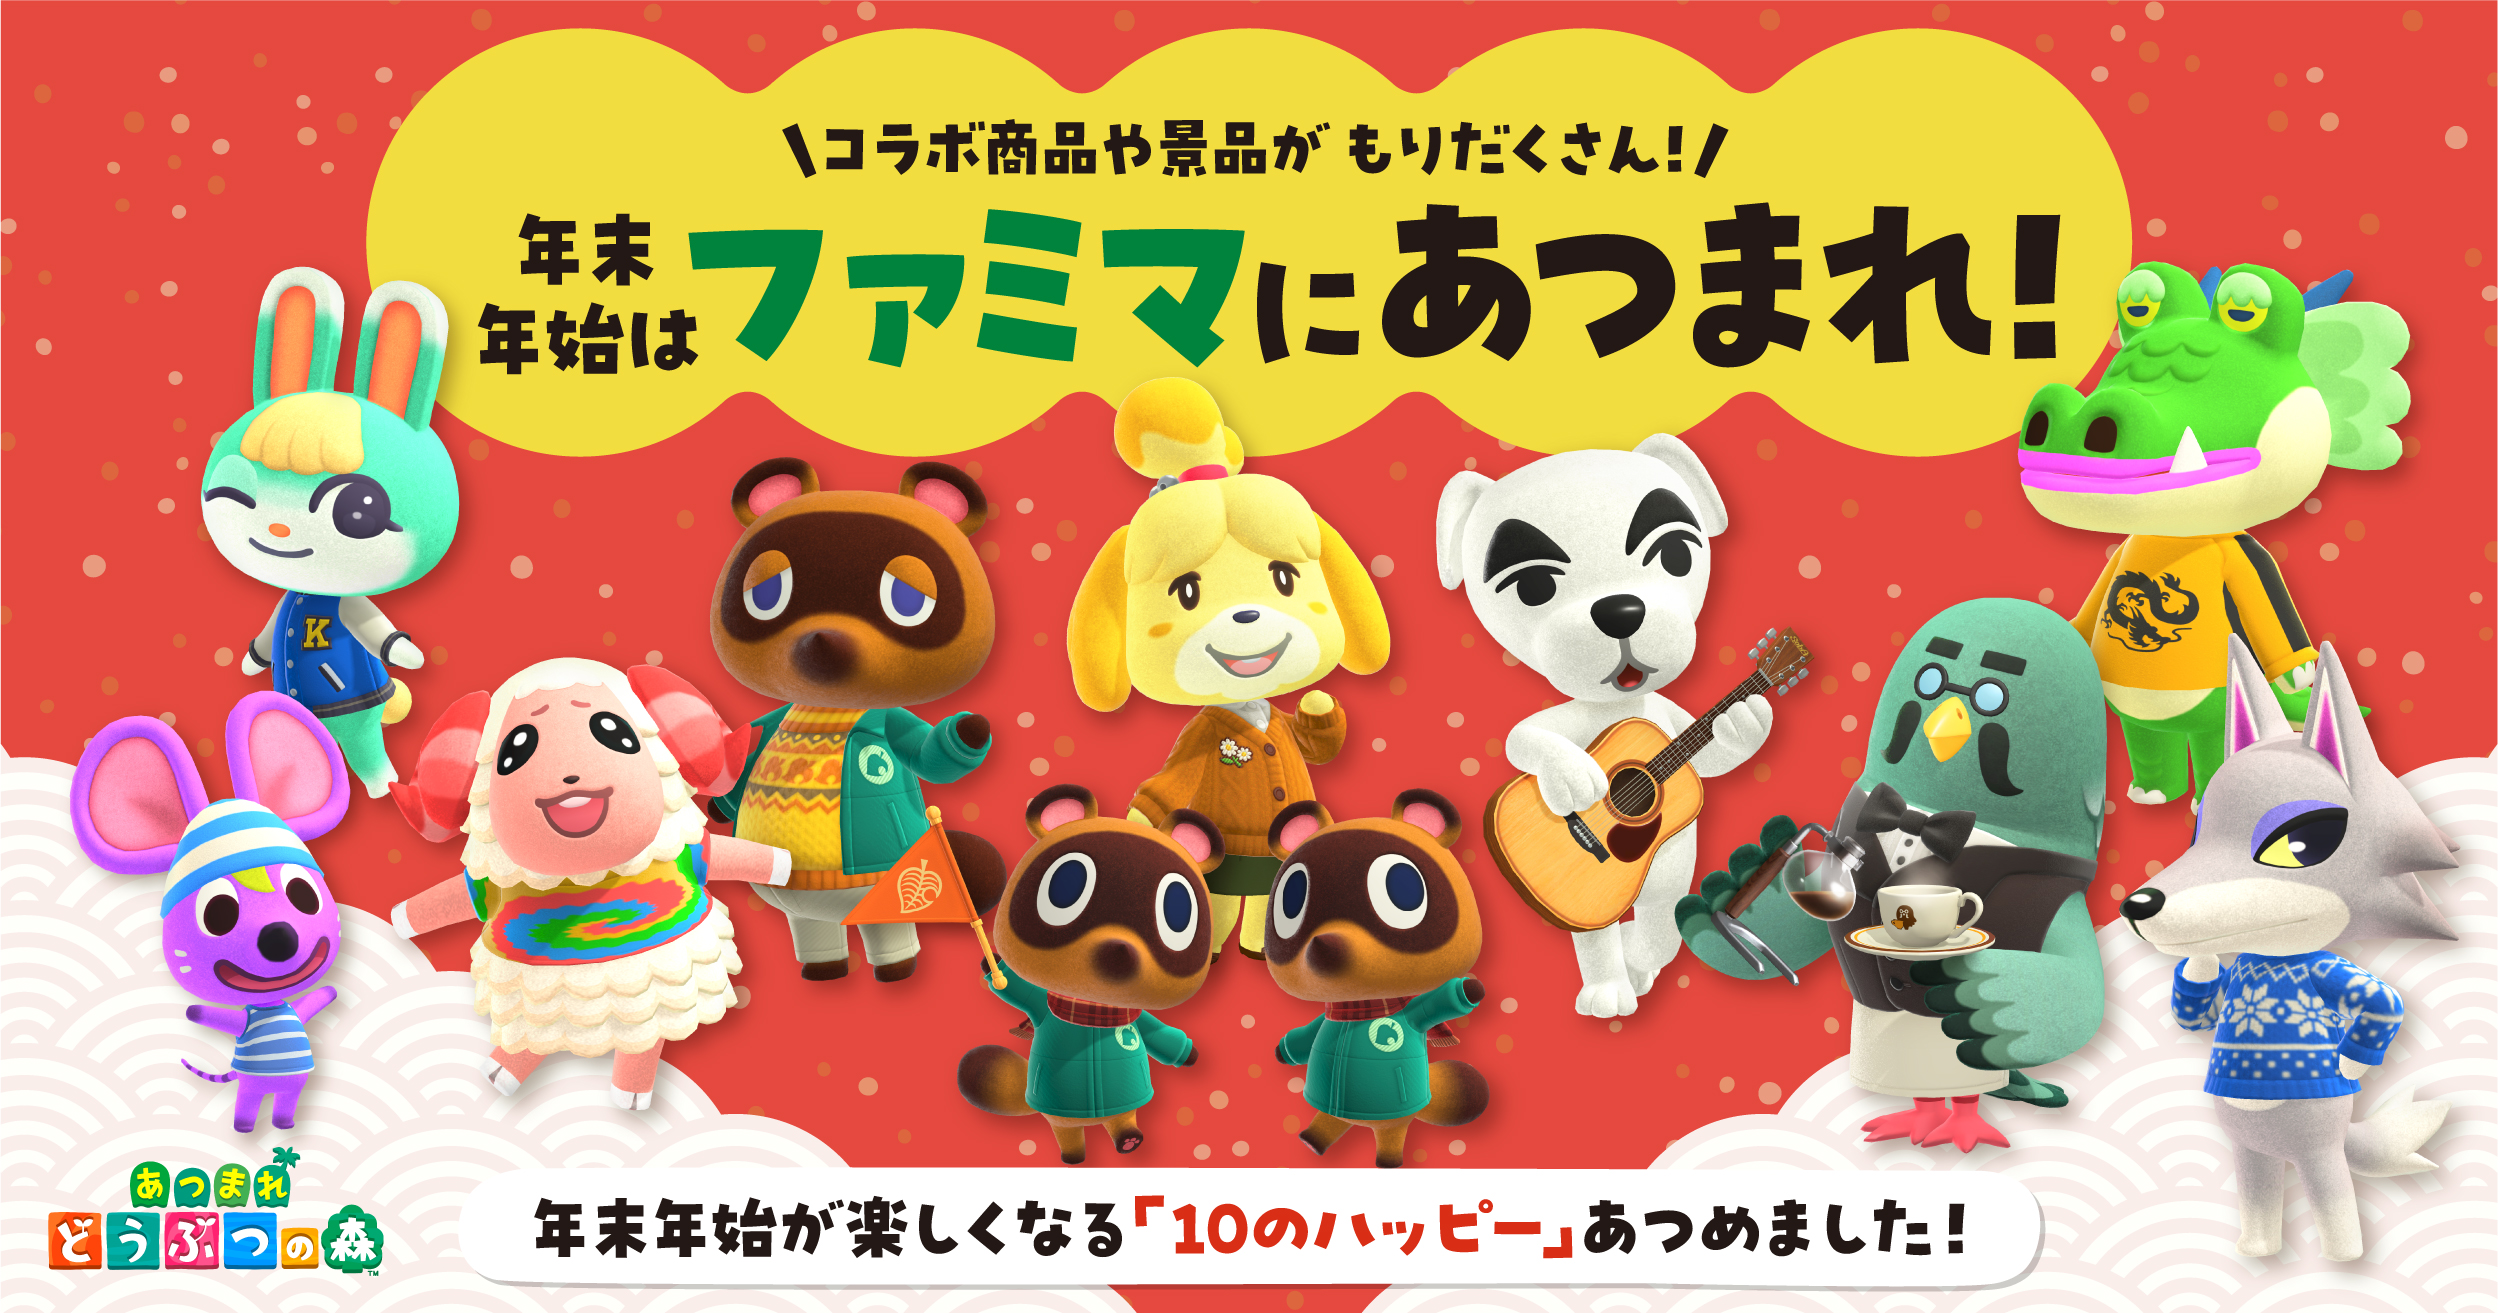 Animal Crossing x Family Mart Collaboration Starts Dec. 26